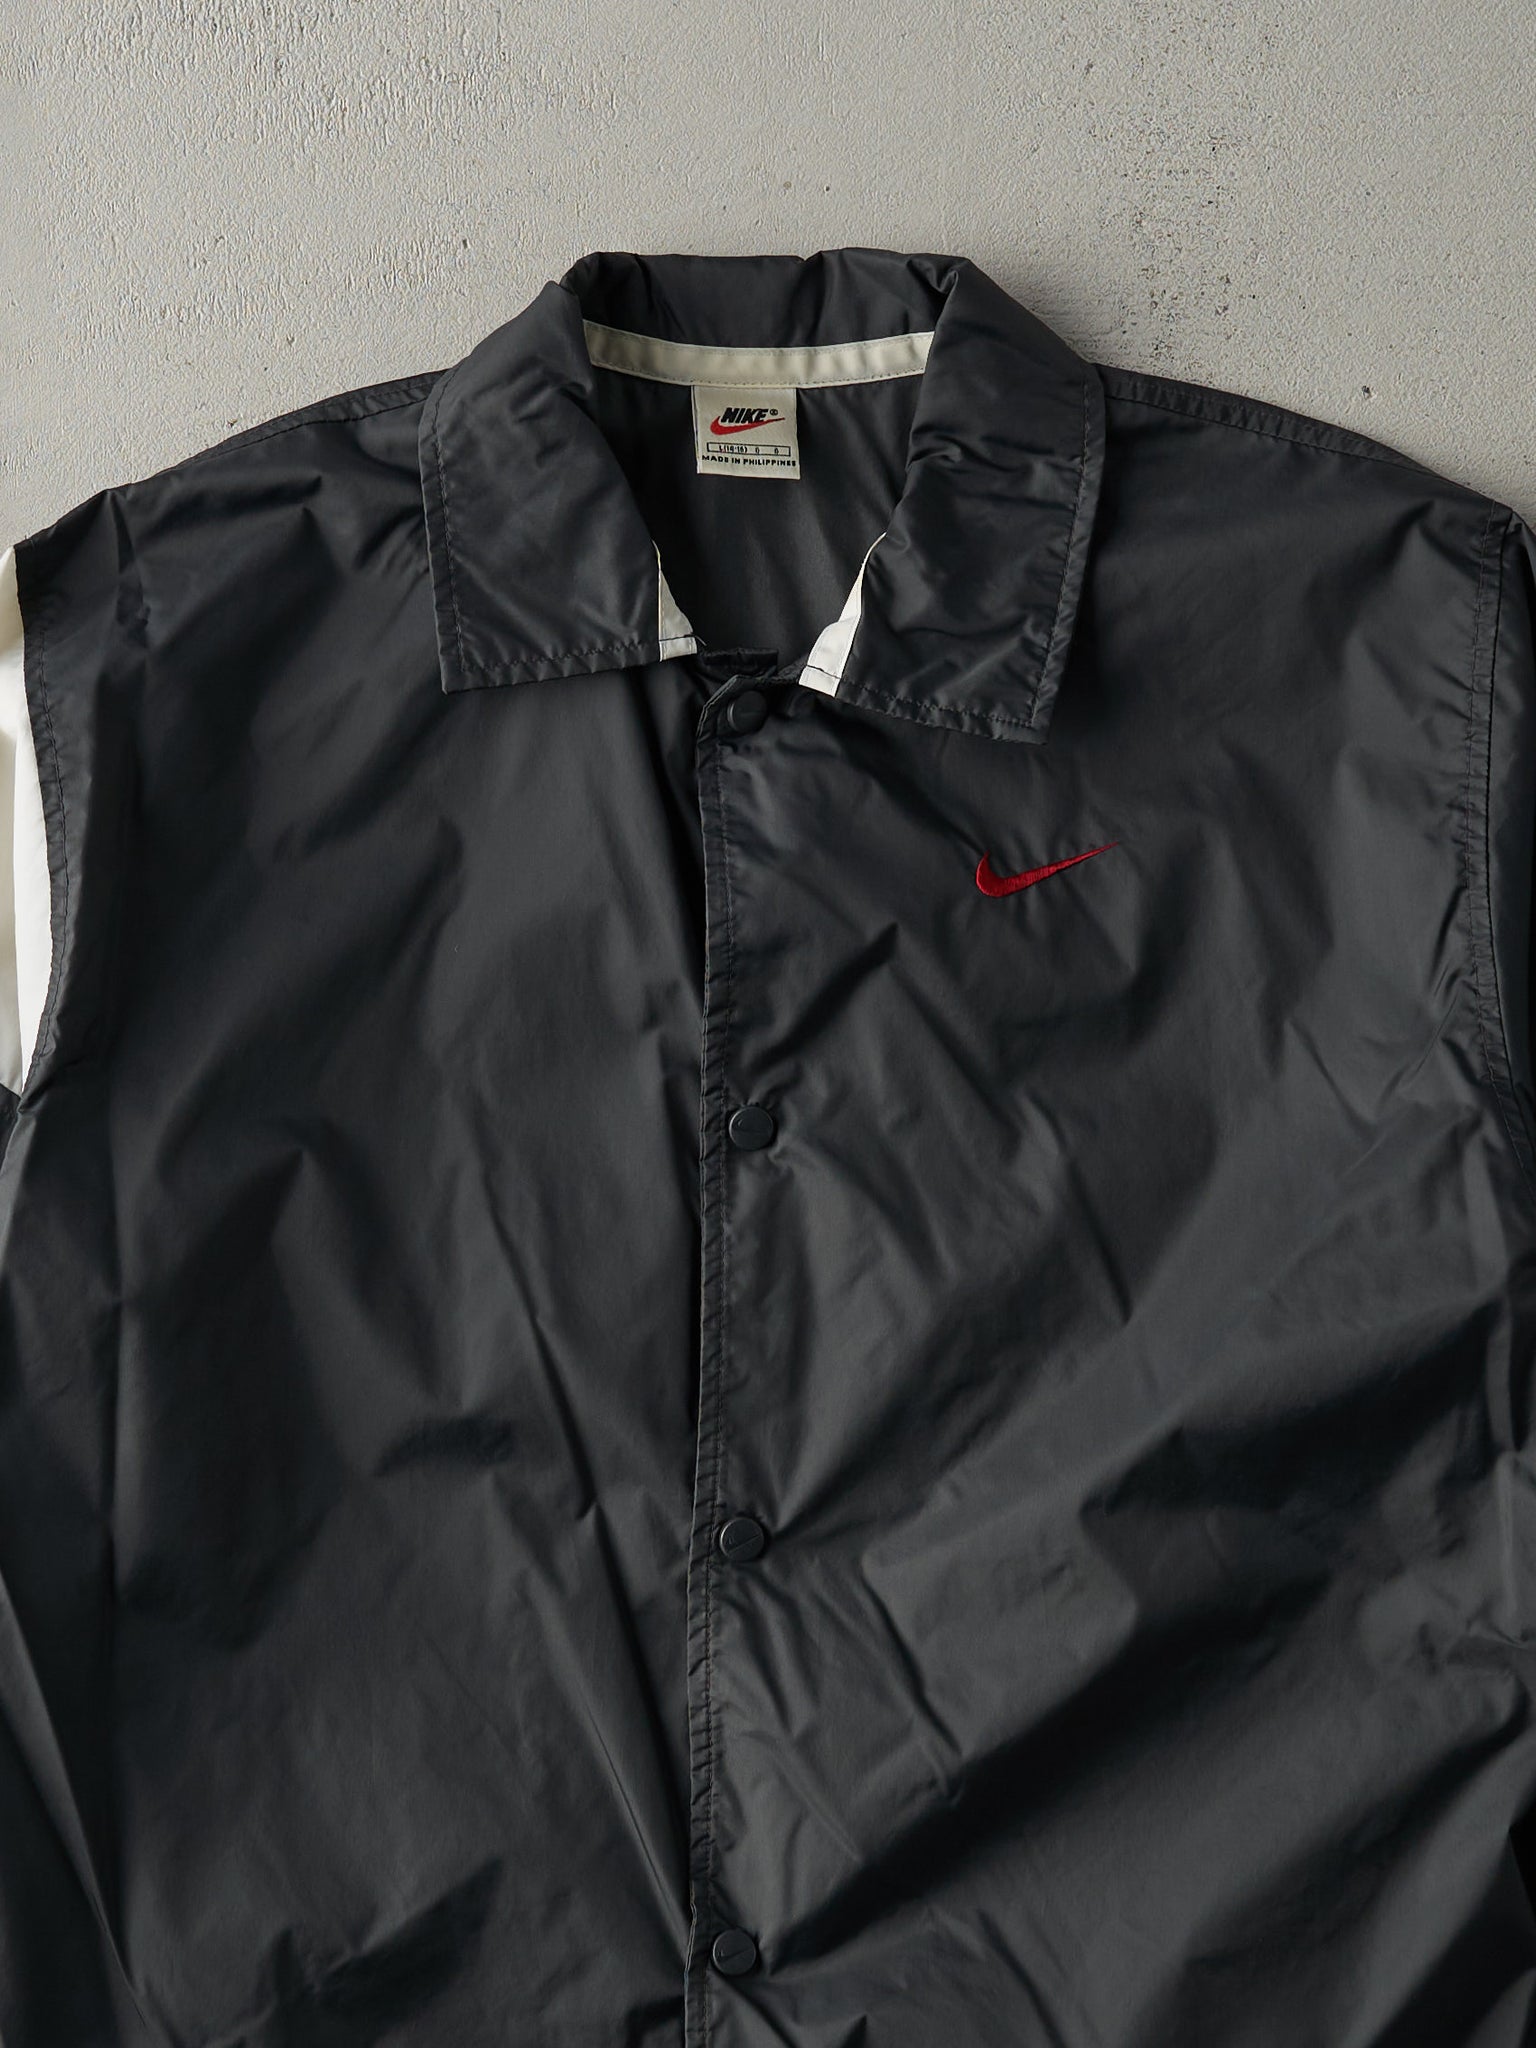 Vintage 90s Black and White Button Up Nike Swoosh Windbreaker Jacket (M)